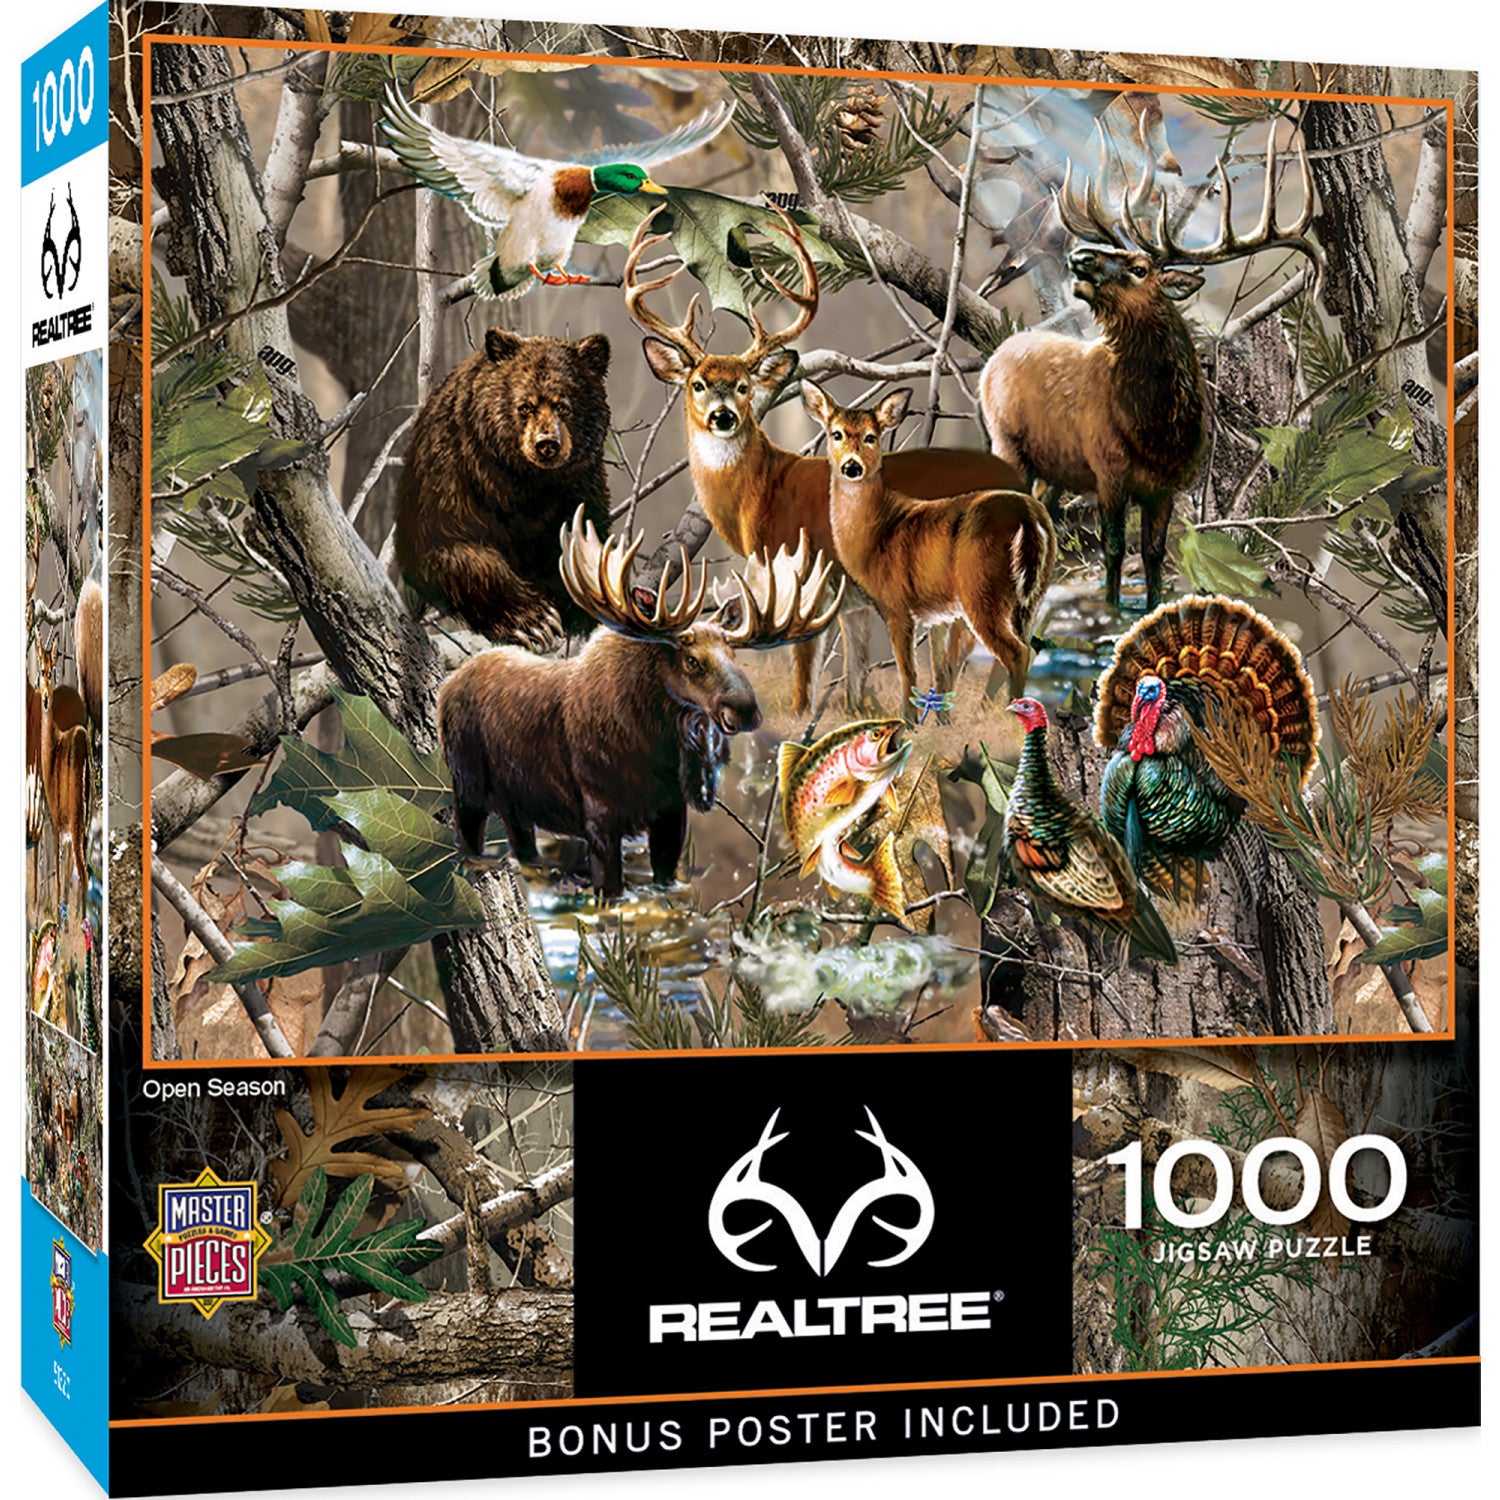 Realtree - Open Season 1000 Piece Jigsaw Puzzle